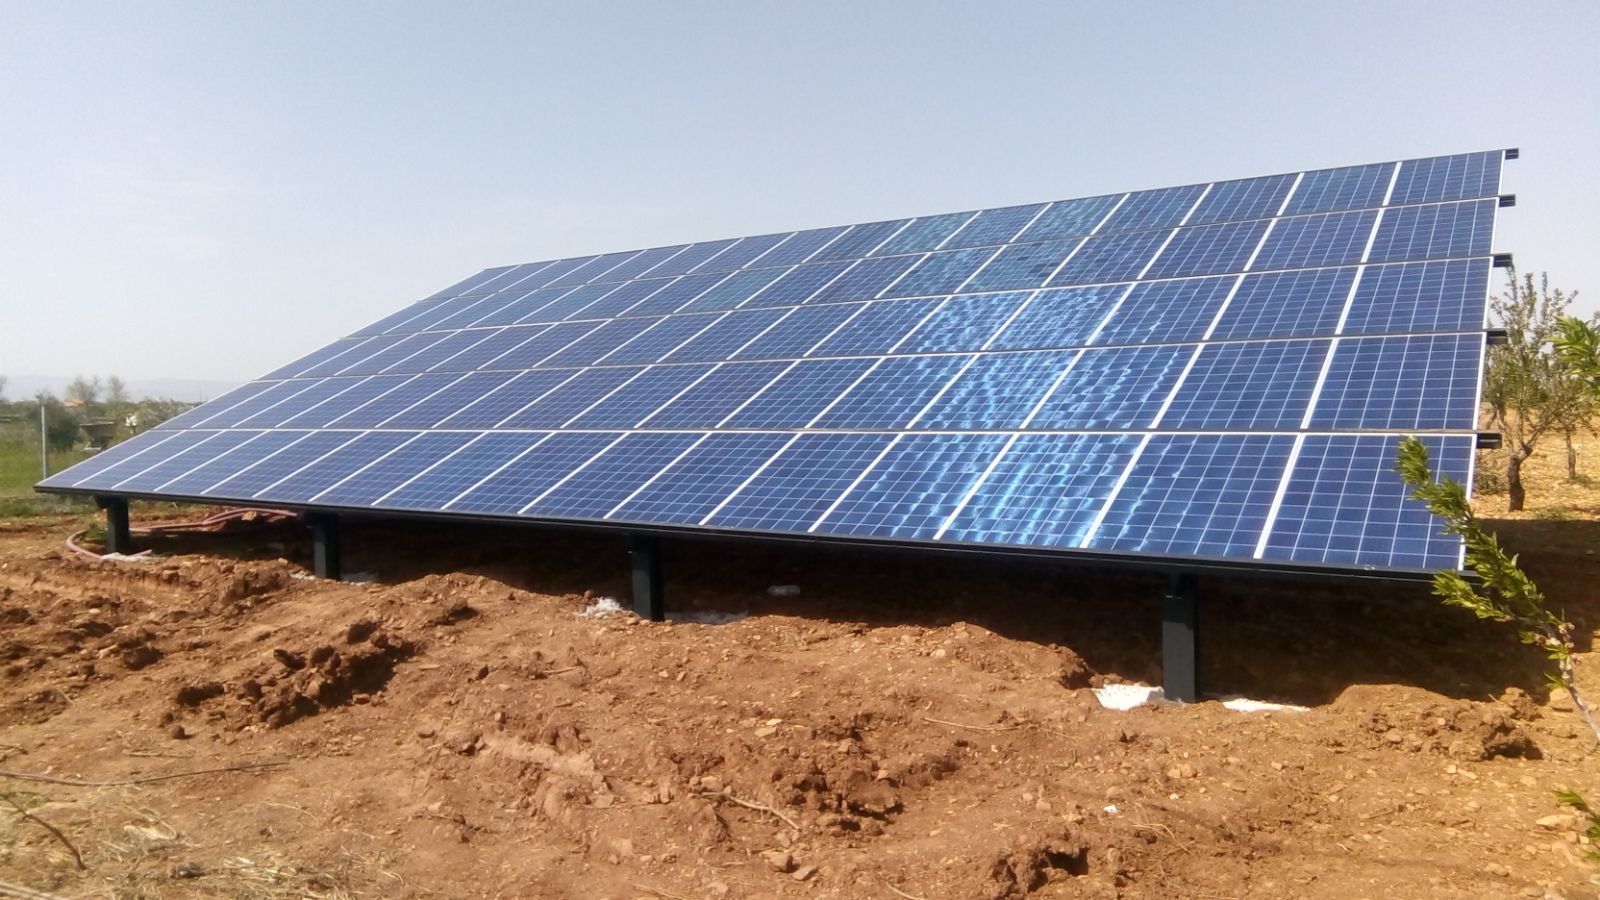 Instalacion fotovoltaica